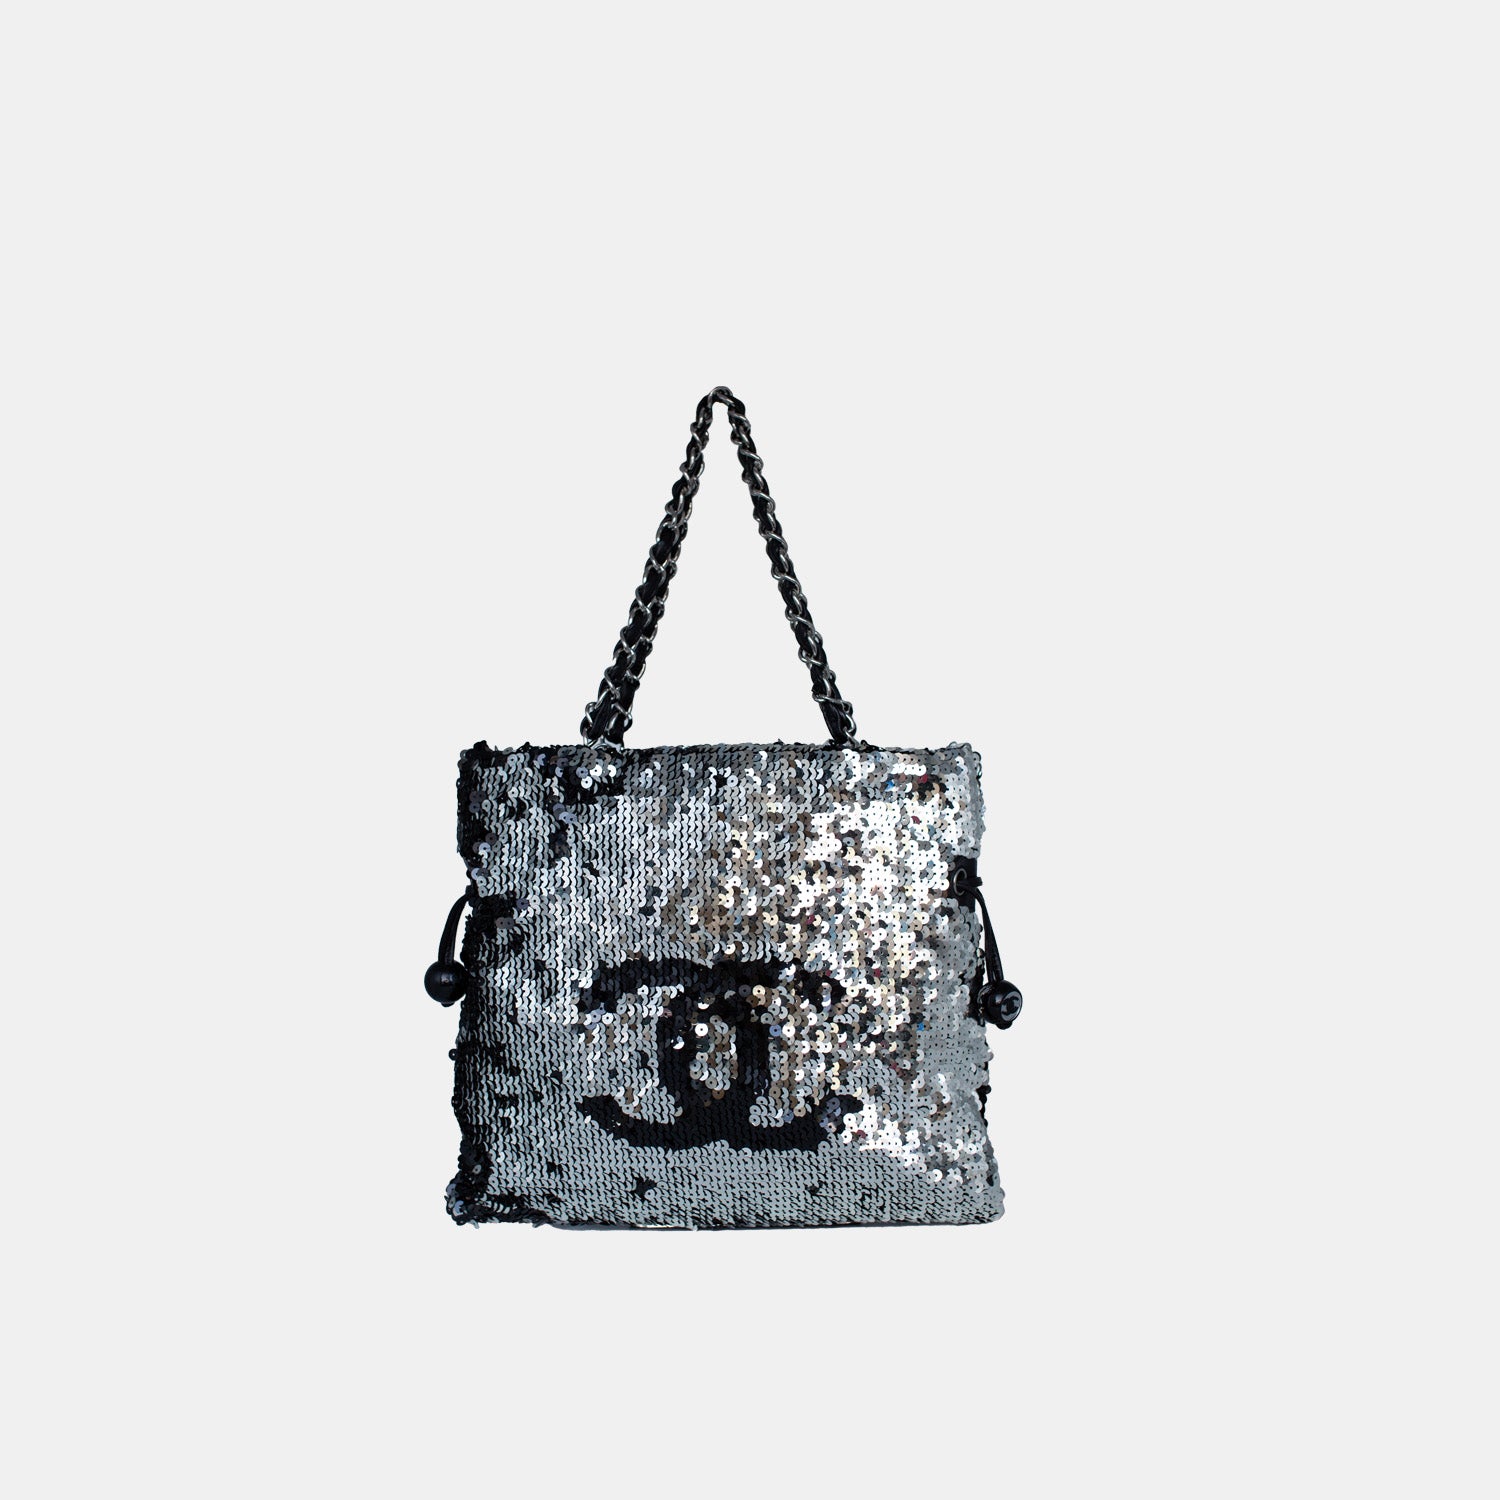 Chanel Summer Nights CC Sequin Bag